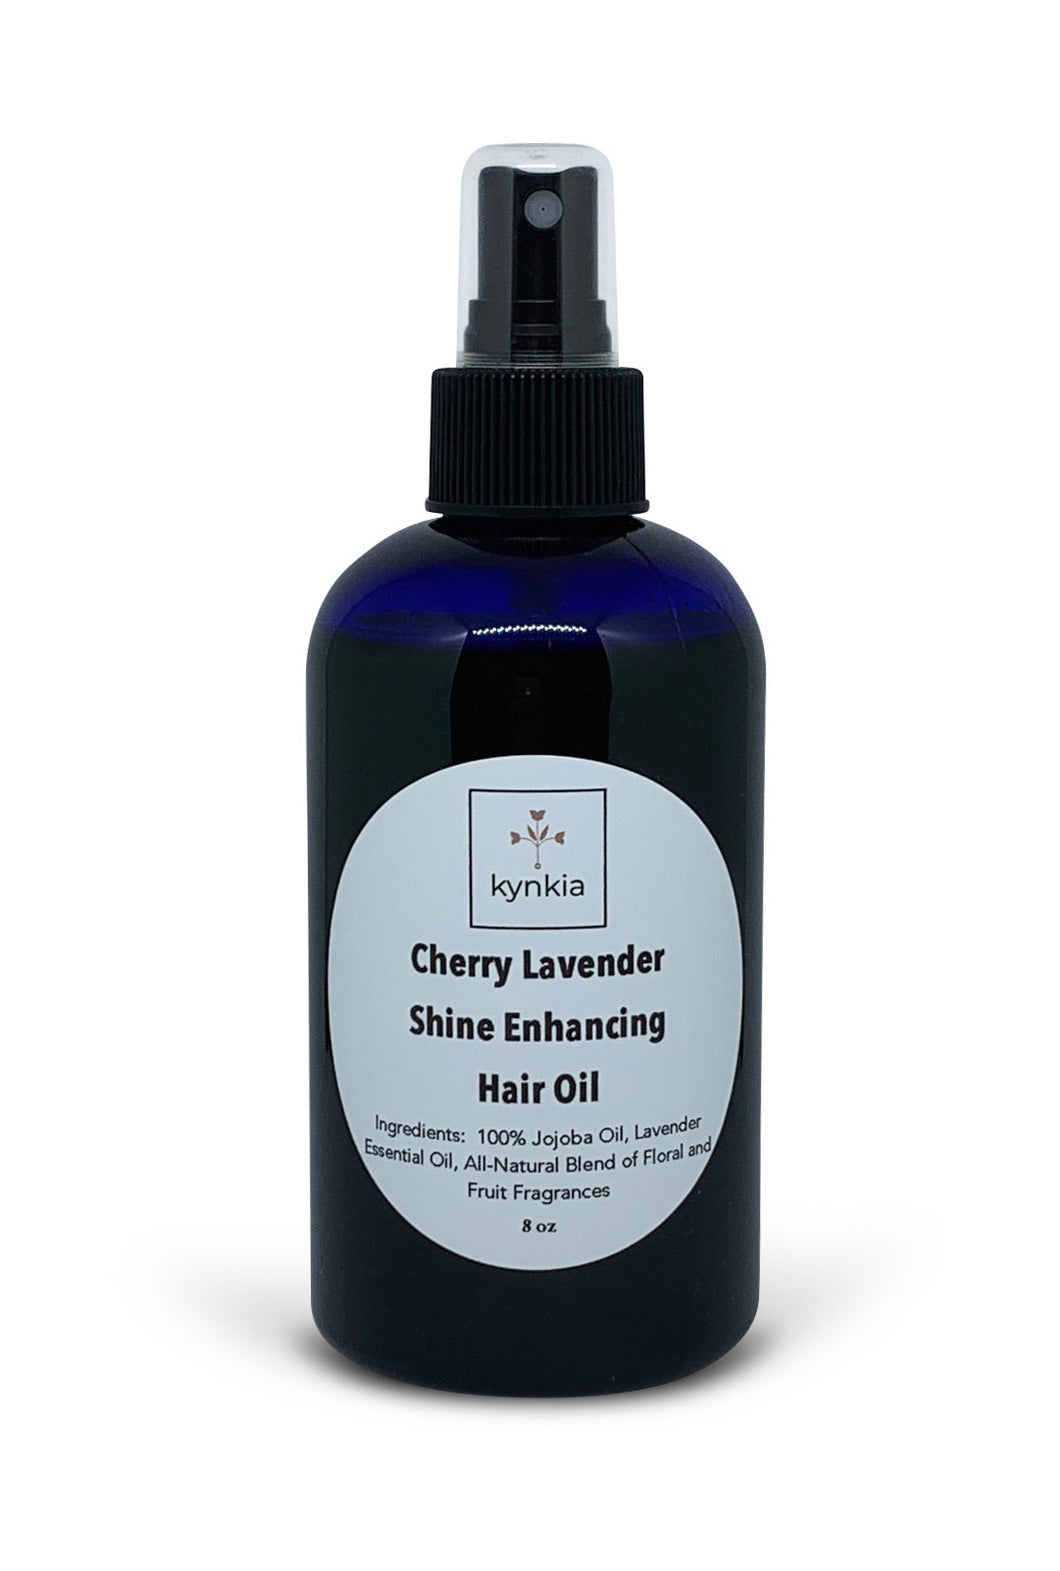 Cherry Lavender Shine Enhancing Hair Oil - 4 oz